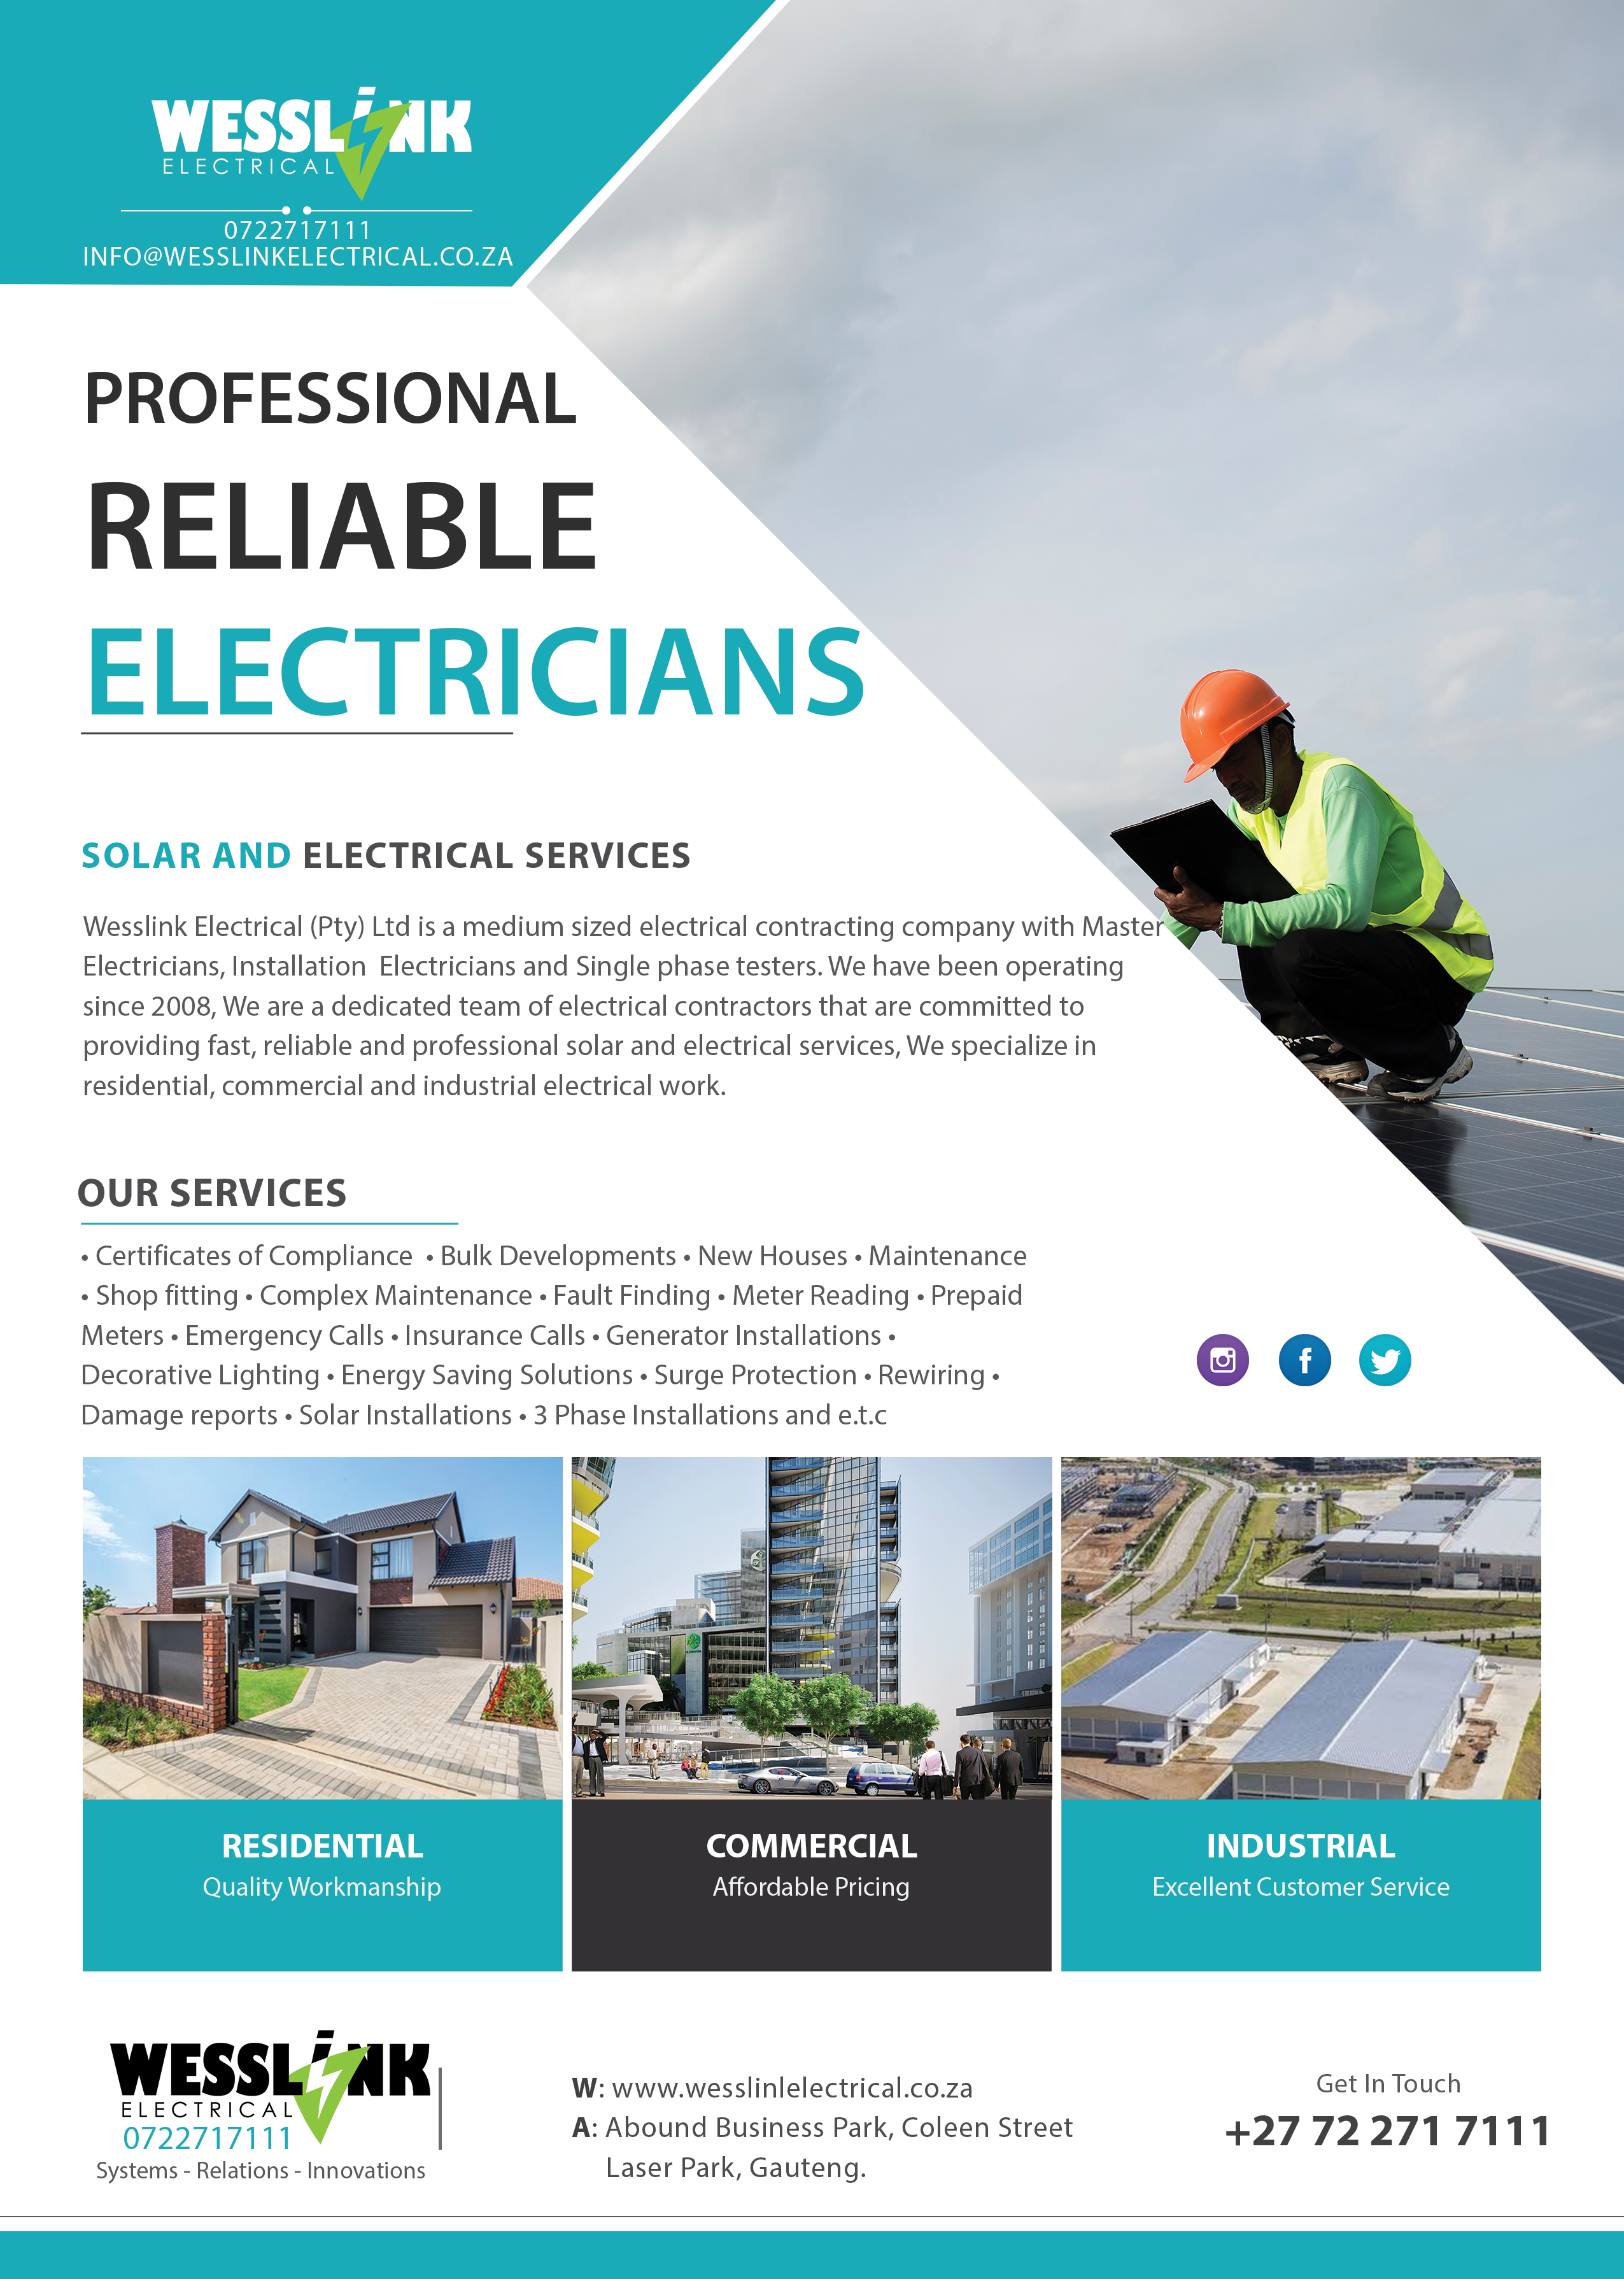 Wesslink Electrical Services